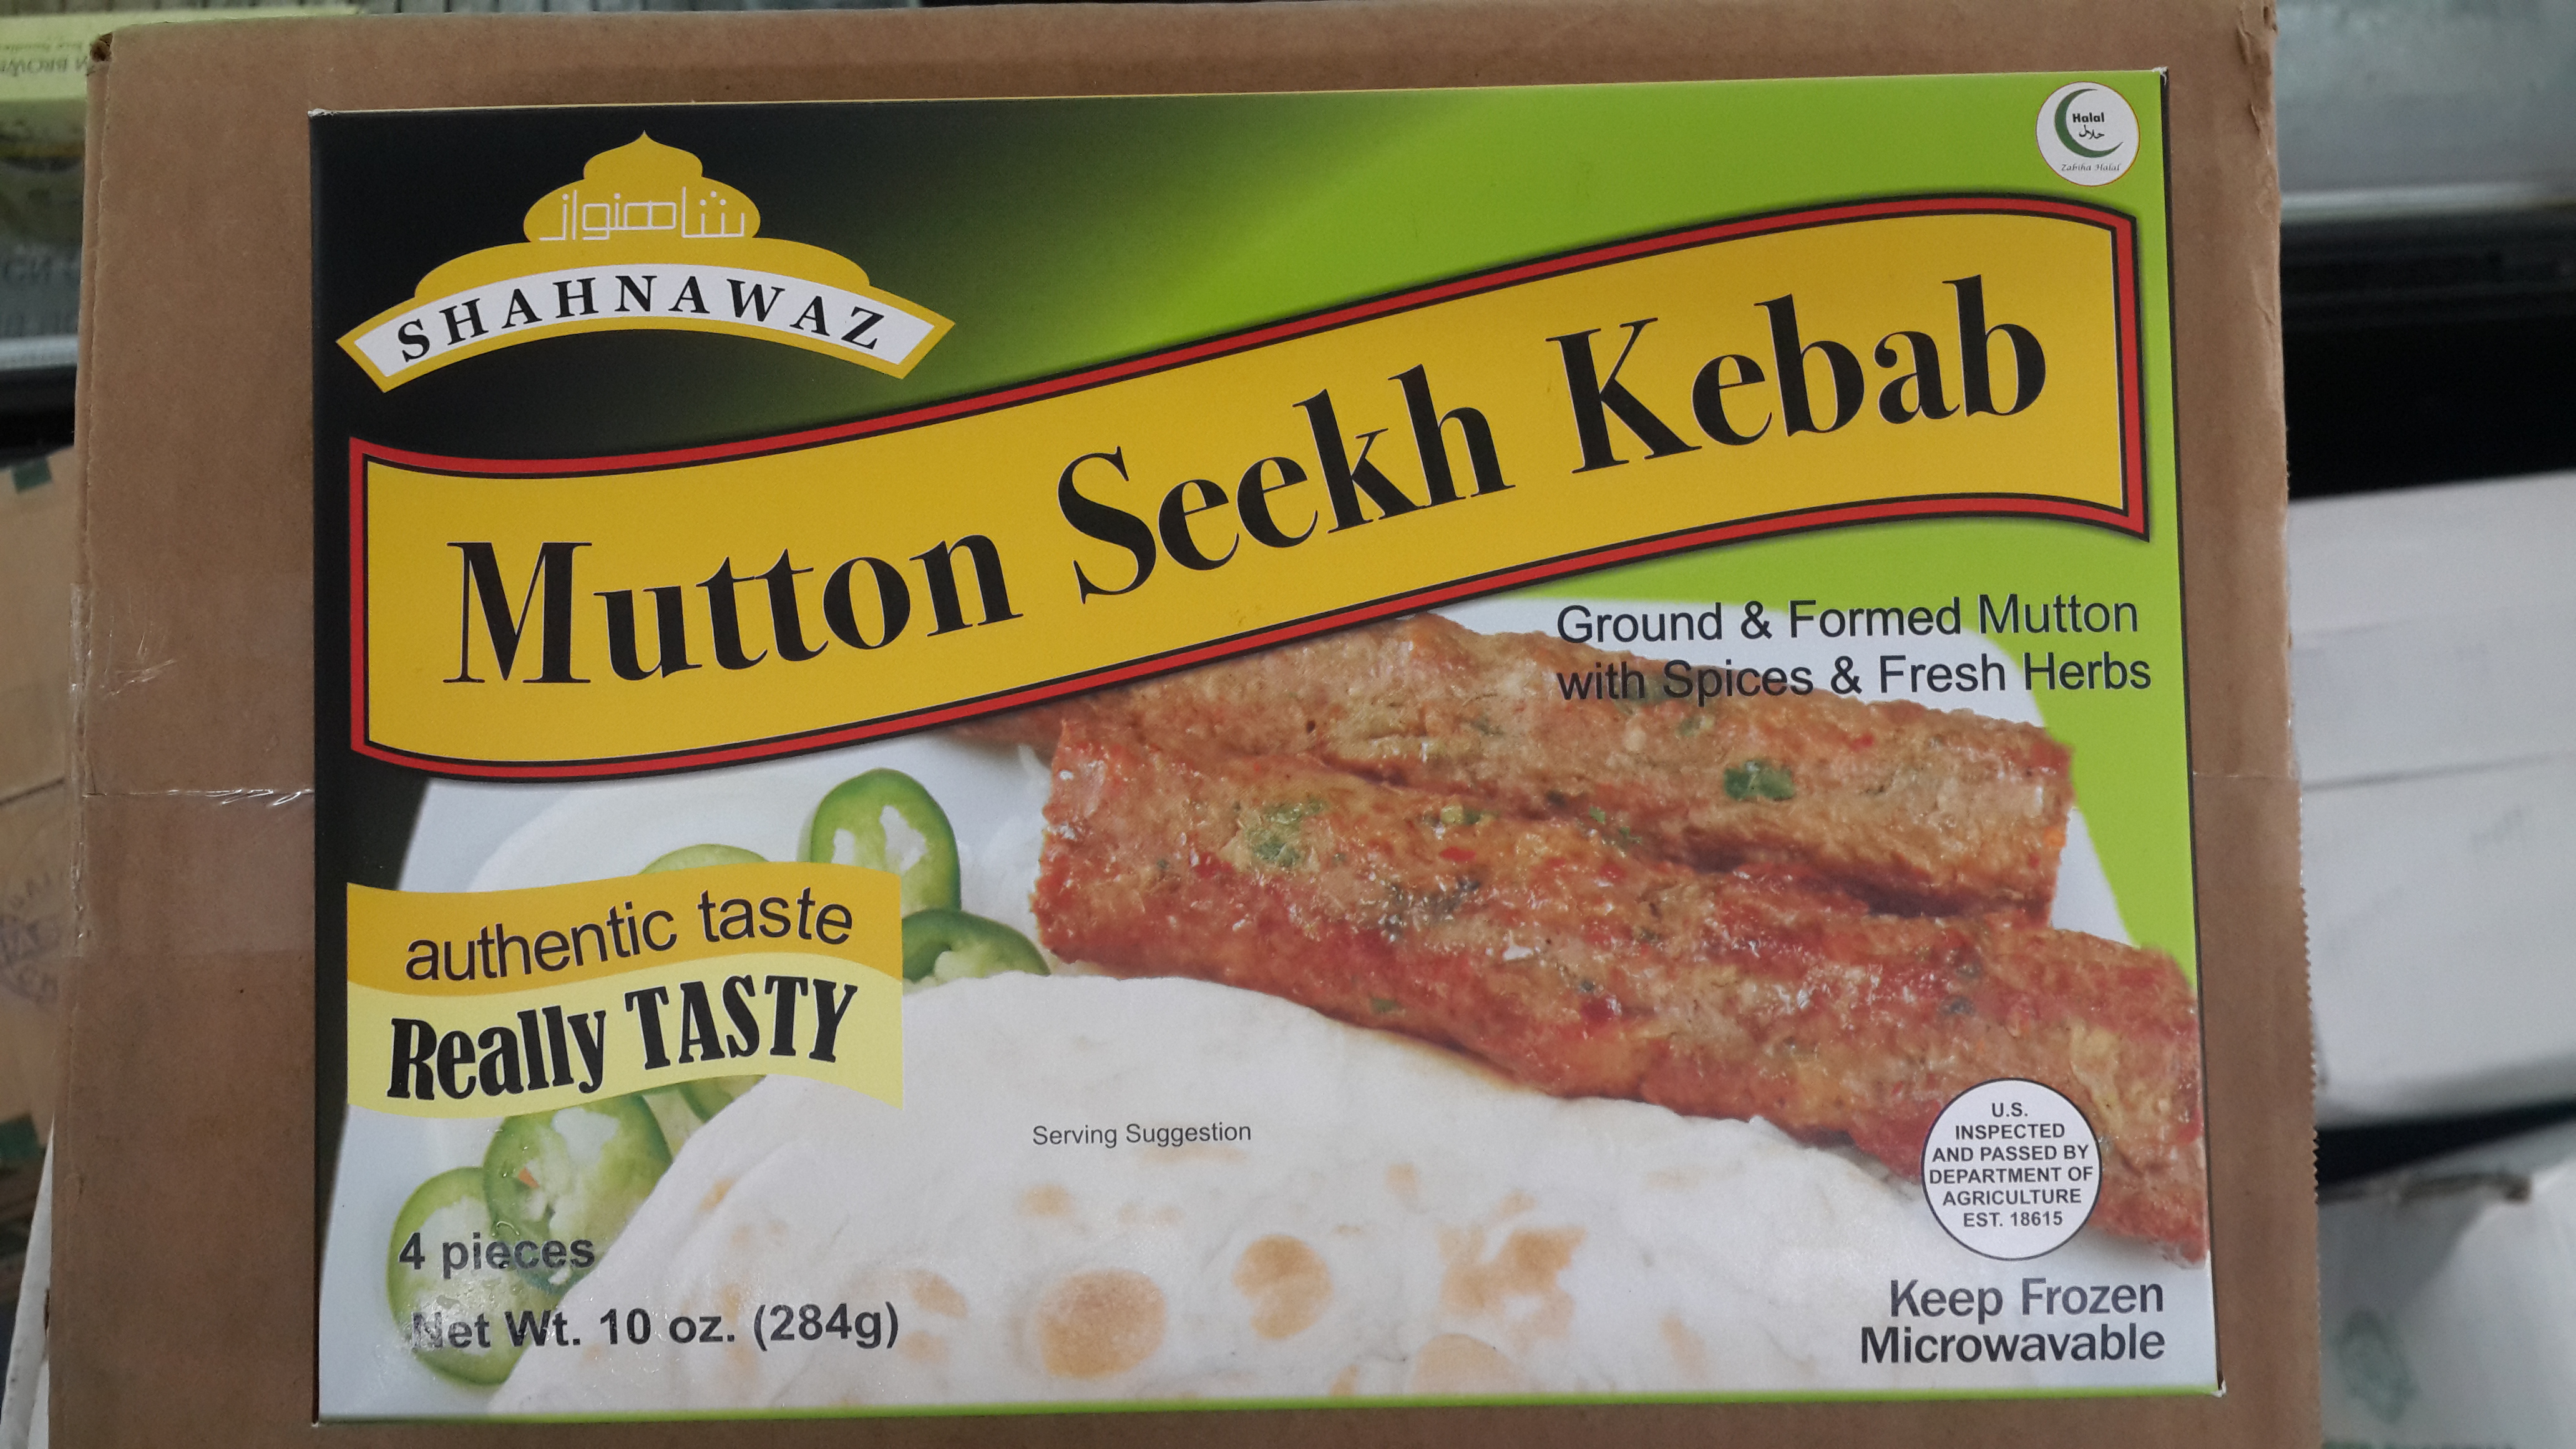 Shahnawaz Mutton Seekh Kebab